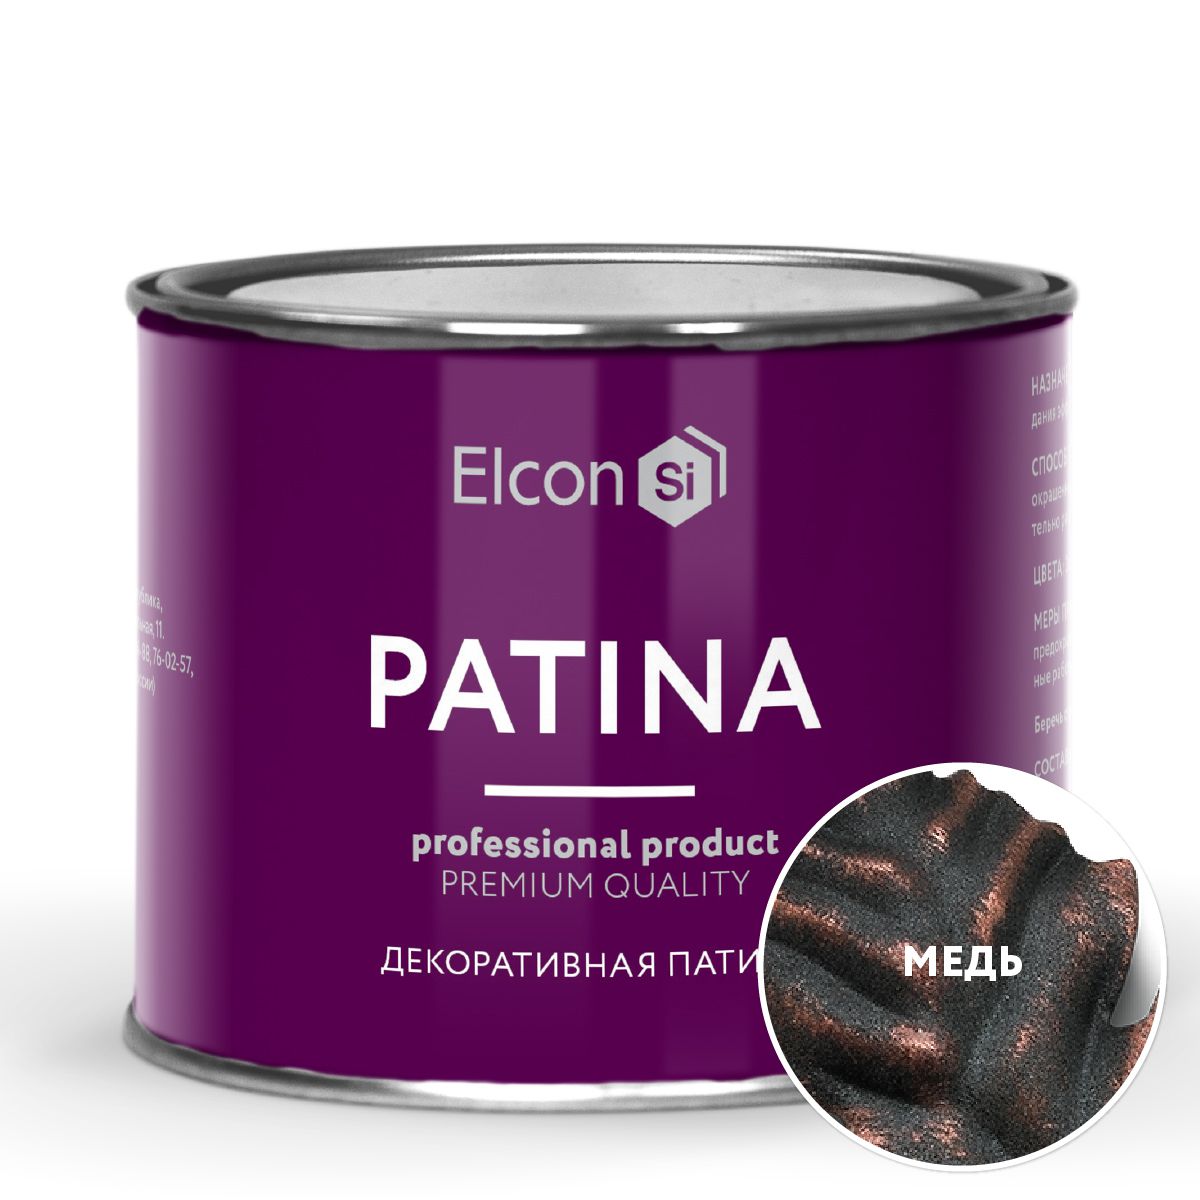 Декоративная патина Elcon Patina Медь 0,2 кг